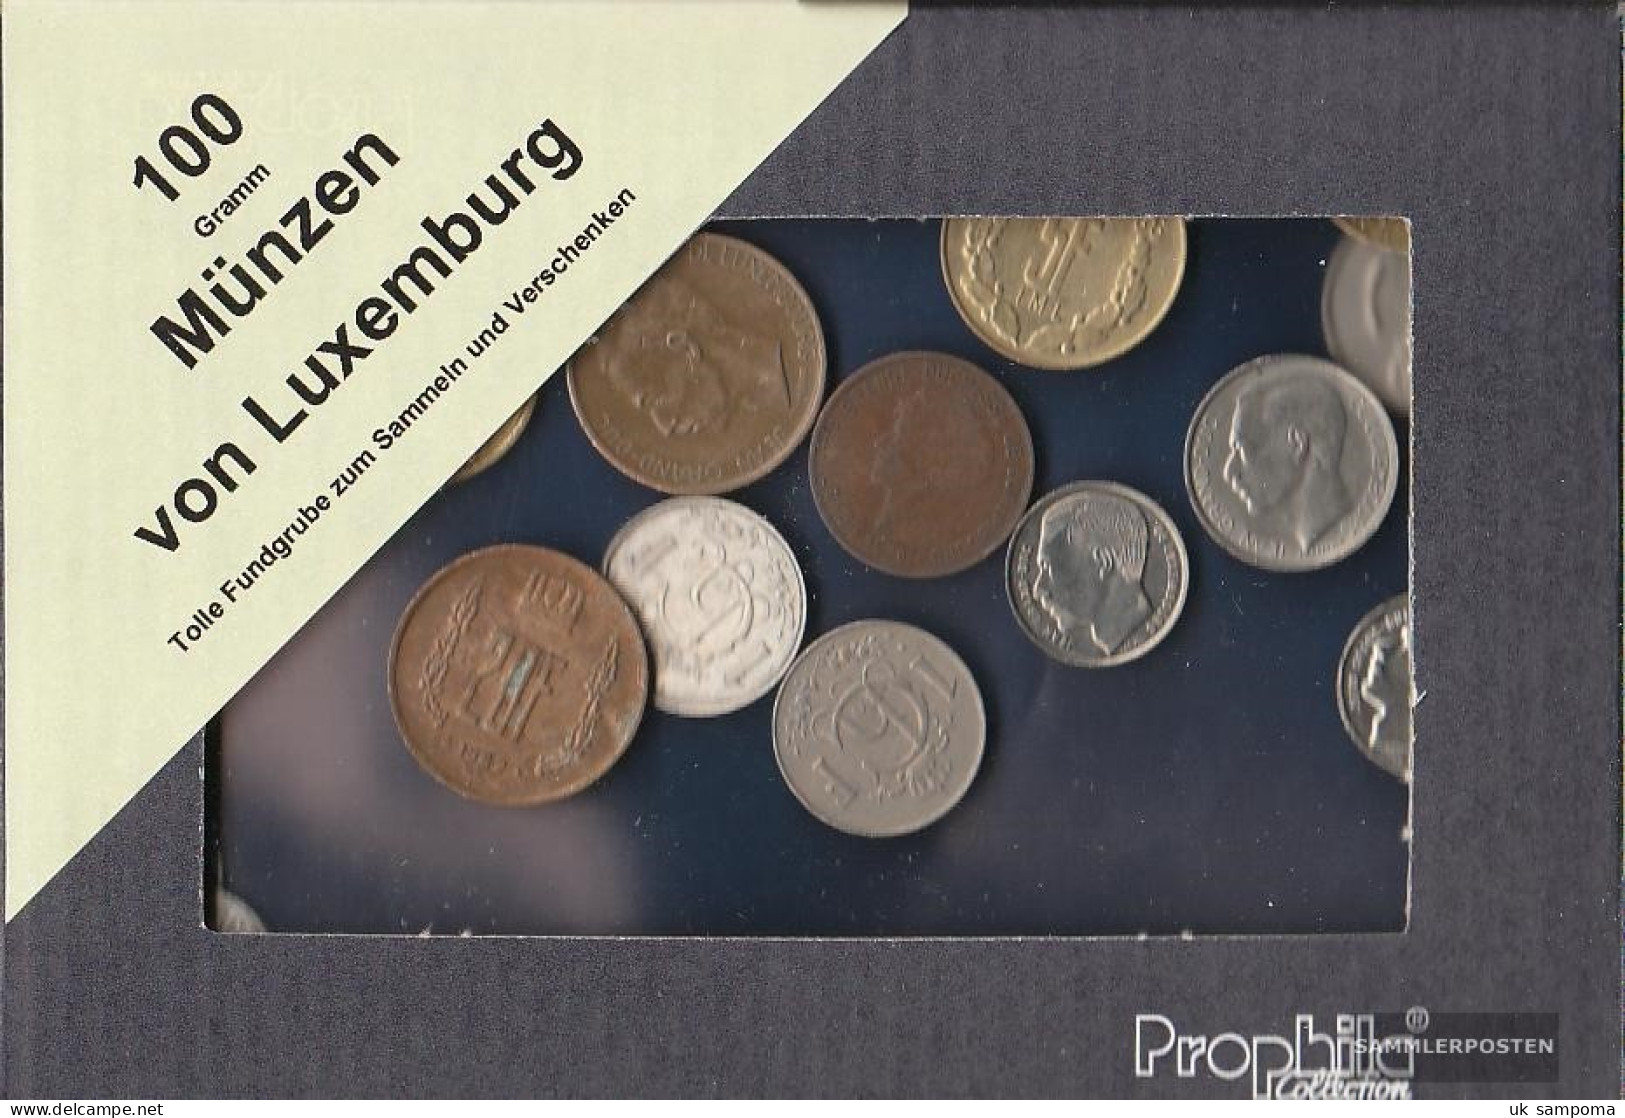 Luxembourg 100 Grams Münzkiloware - Lots & Kiloware - Coins